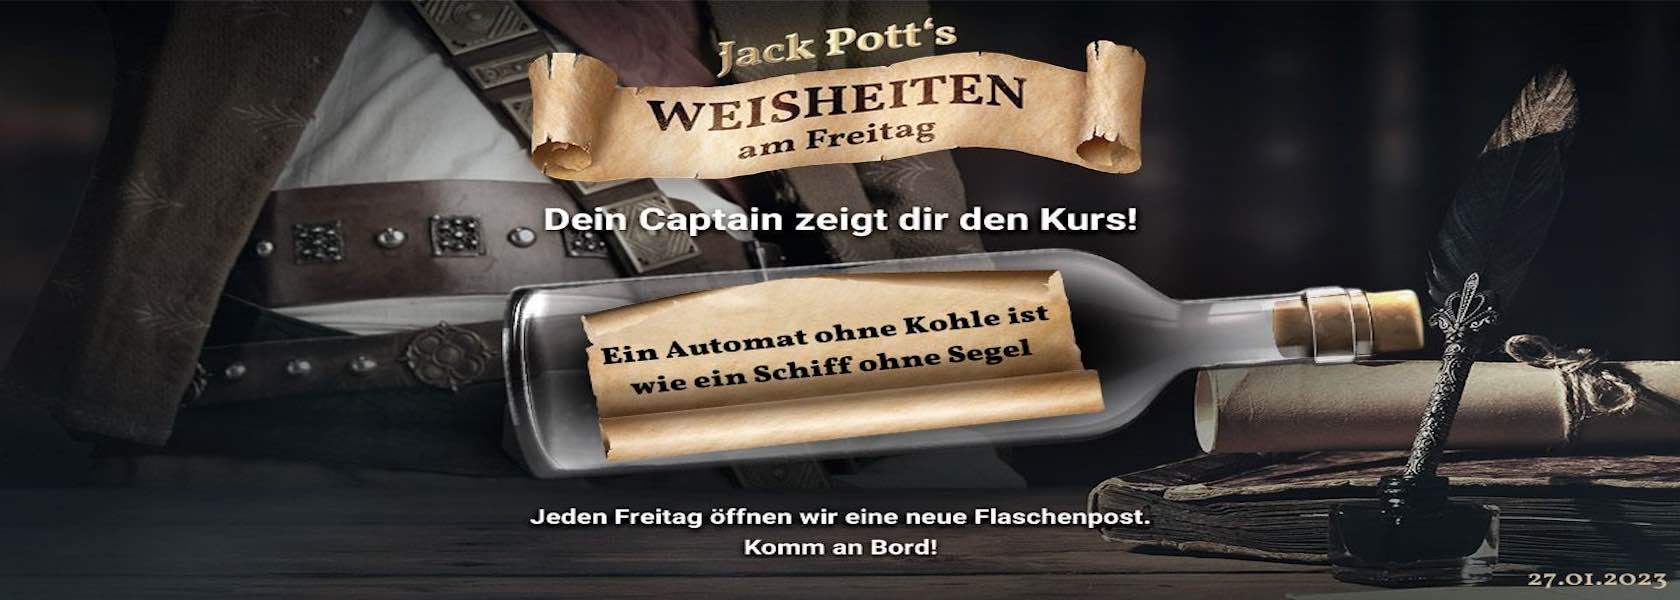 jack-potts-weisheiten-am-freitag-27012023-1680x600